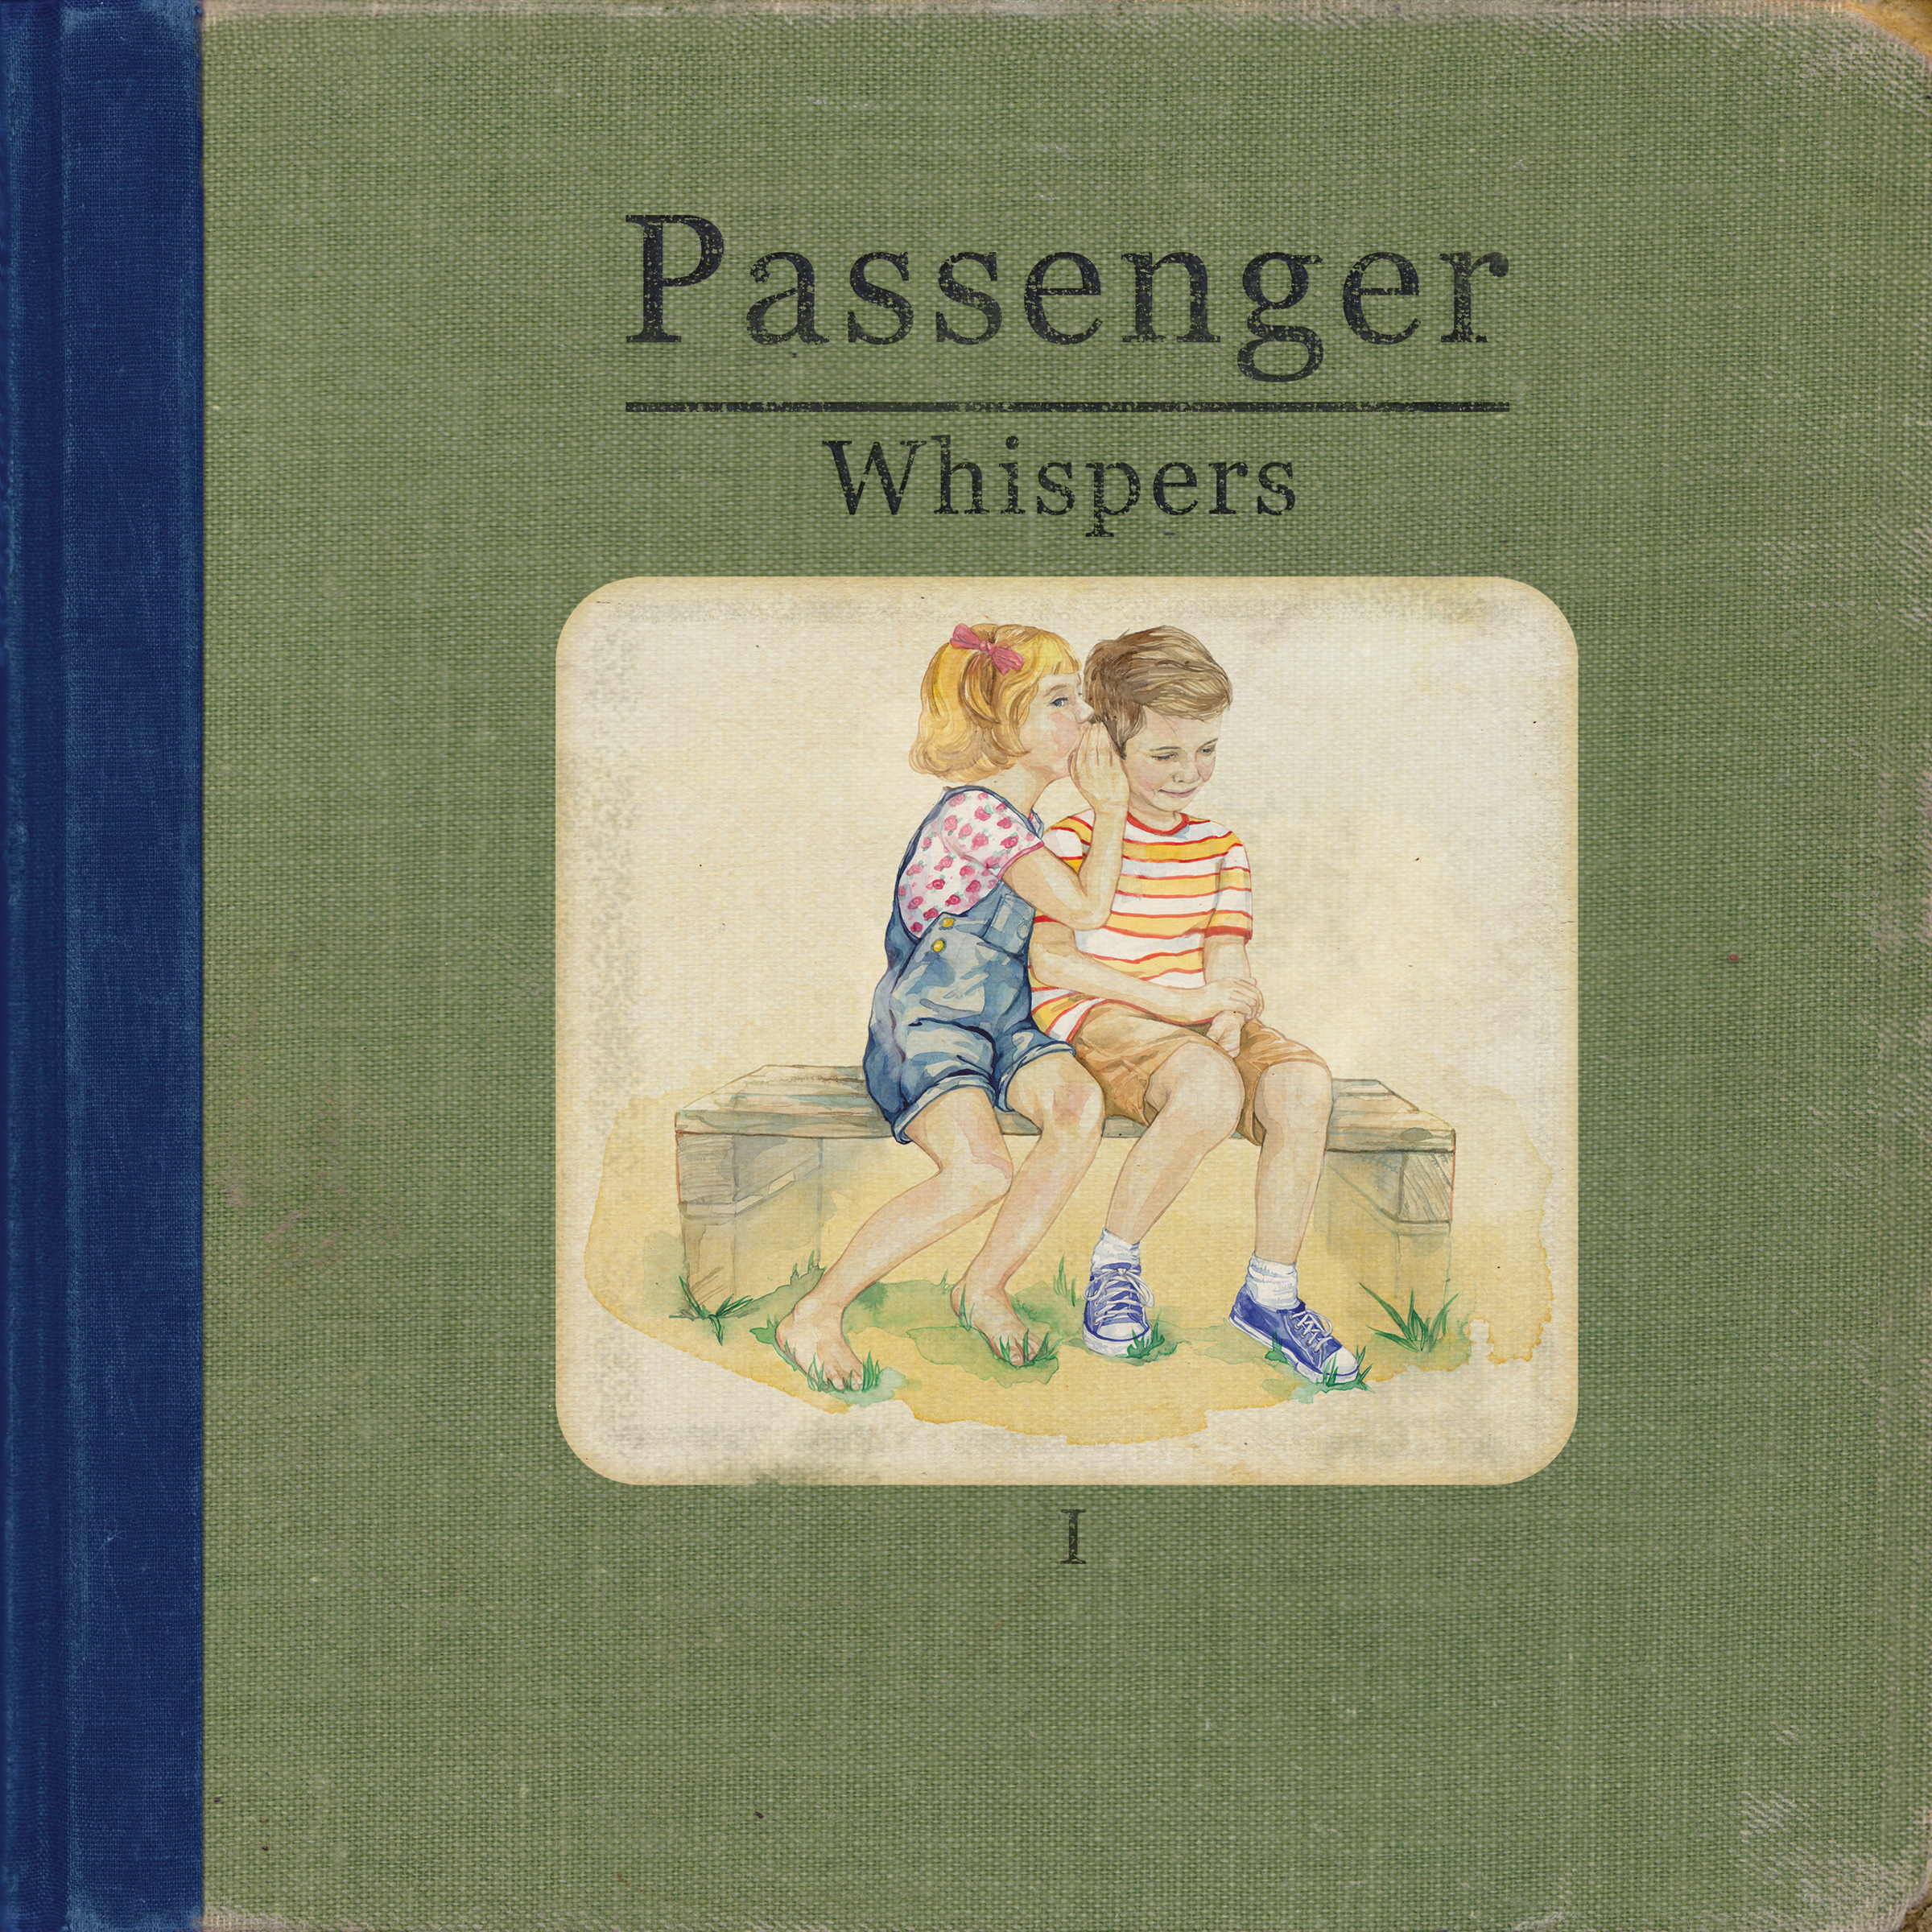 (Deluxe Passenger (CD) - Whispers Edition) -